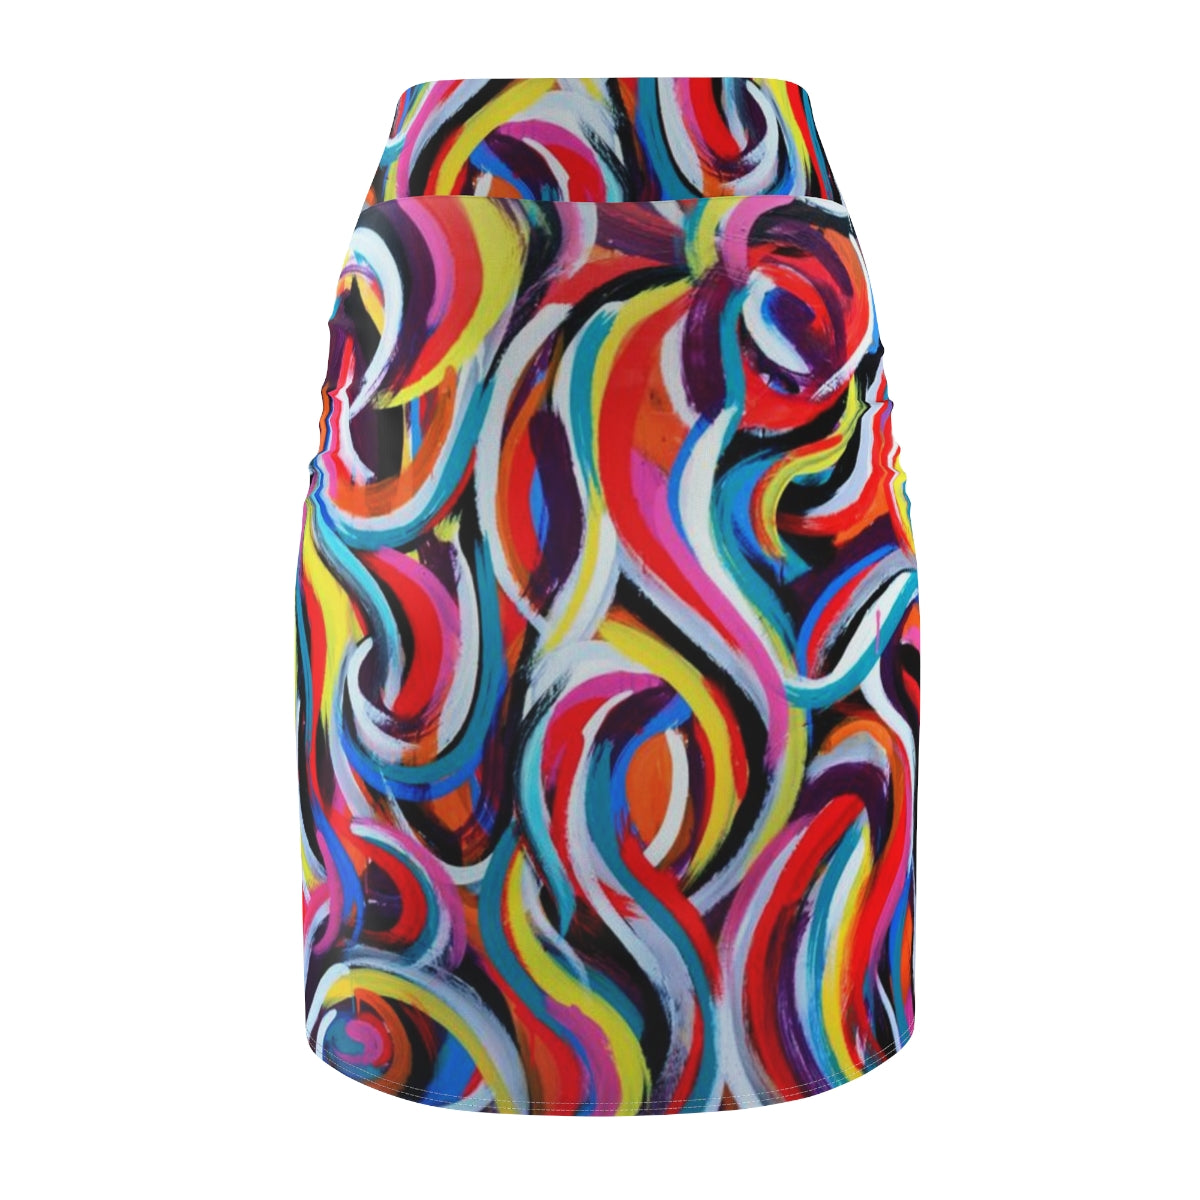 Women's Pencil Skirt - Multi color swirls